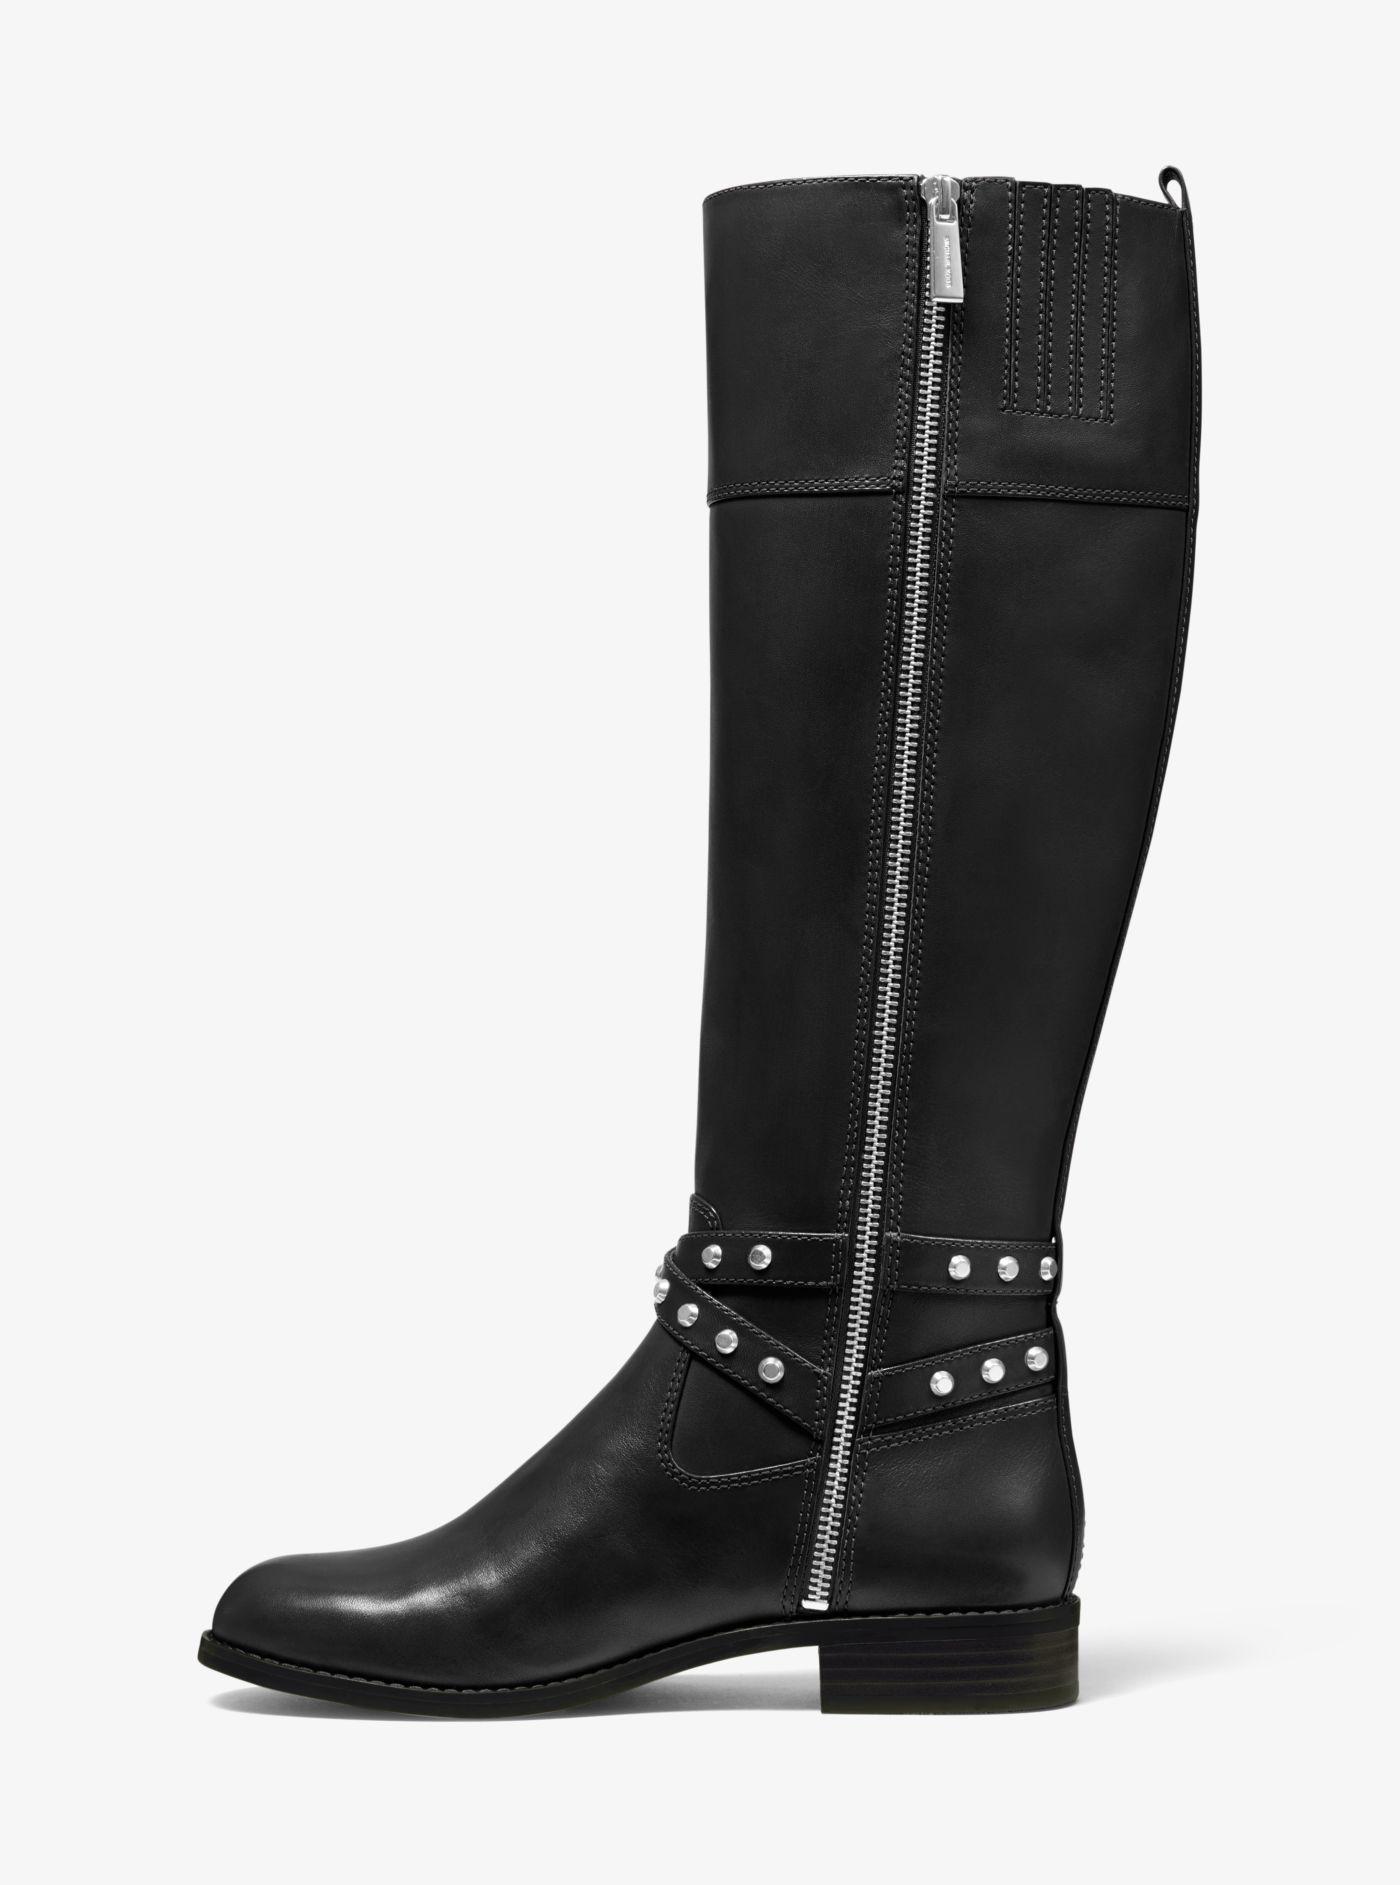 Michael Kors Preston Studded Leather Boot in Black - Lyst